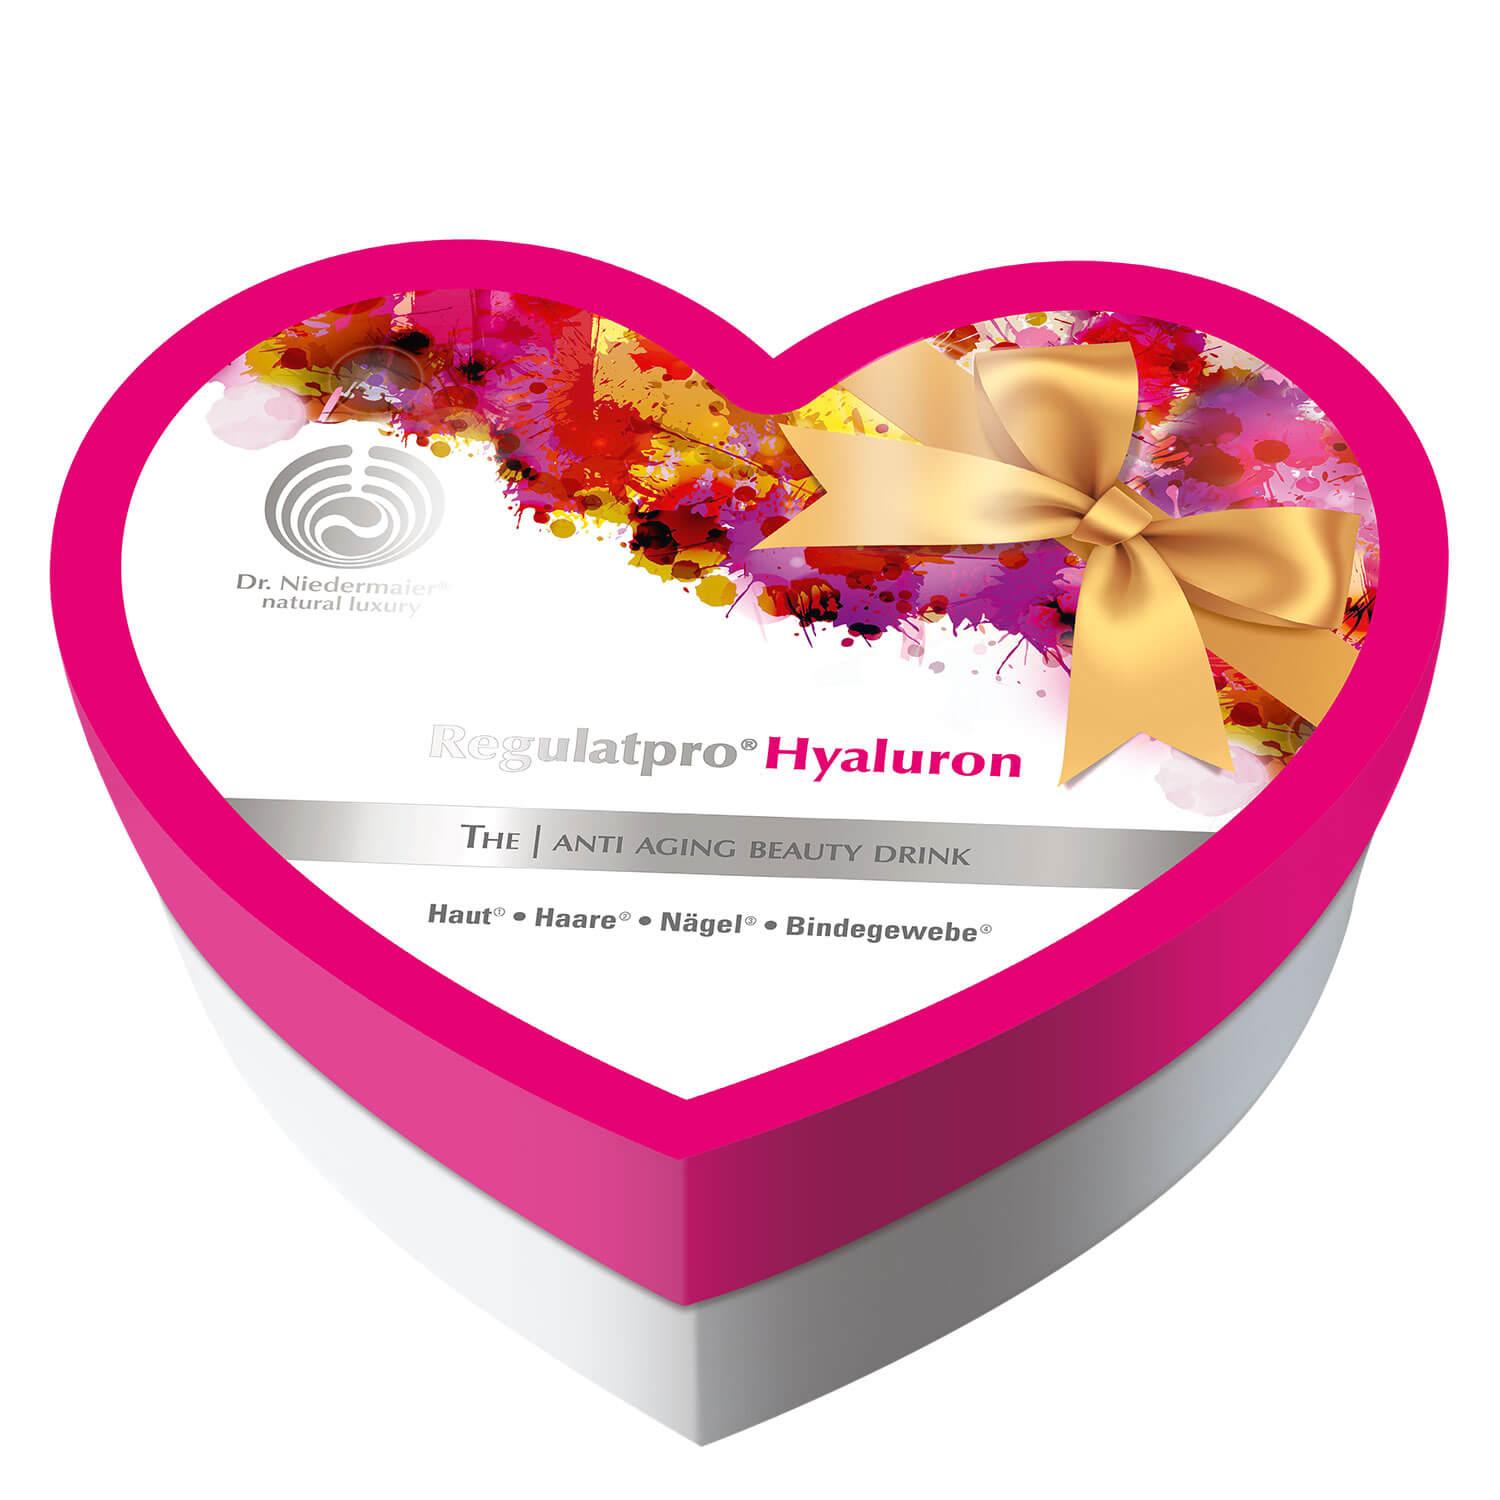 Regulatpro® - Hyaluron Heart Box